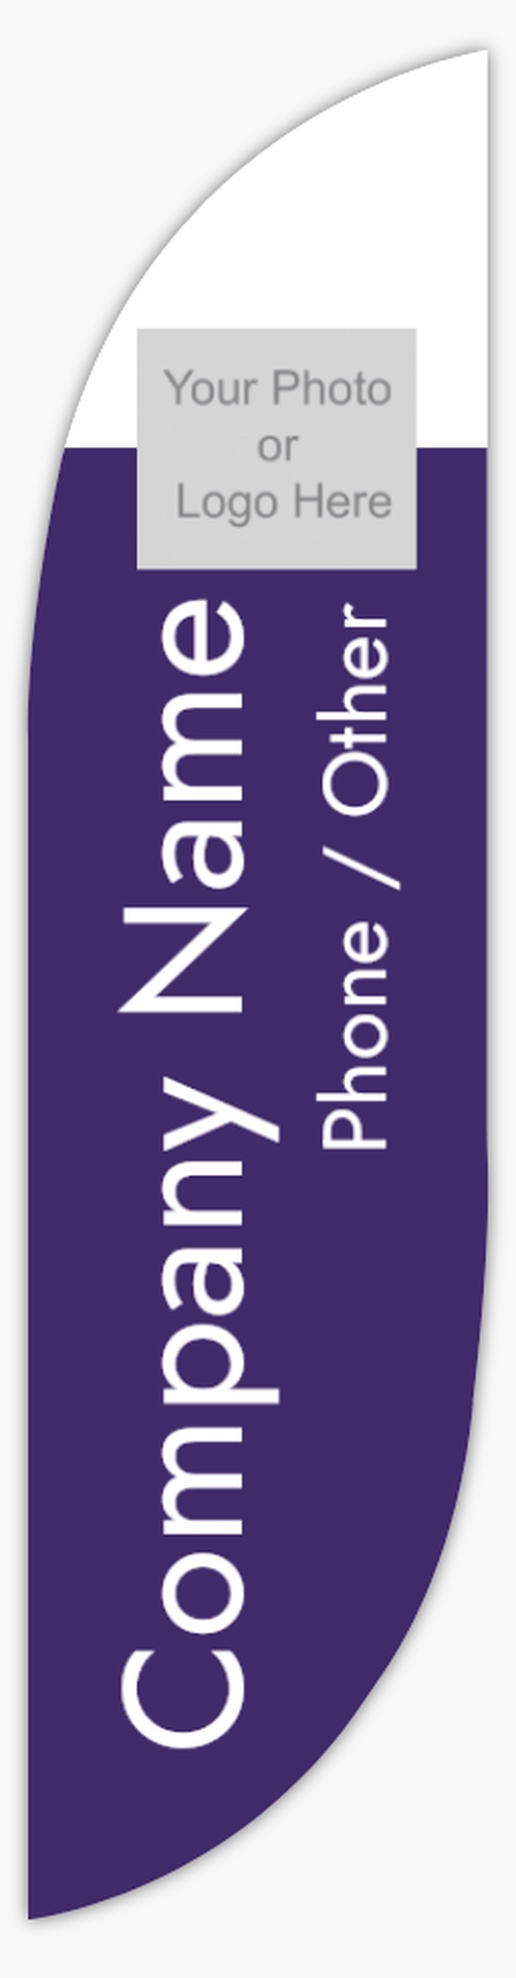 A ren きれい purple white design with 1 uploads